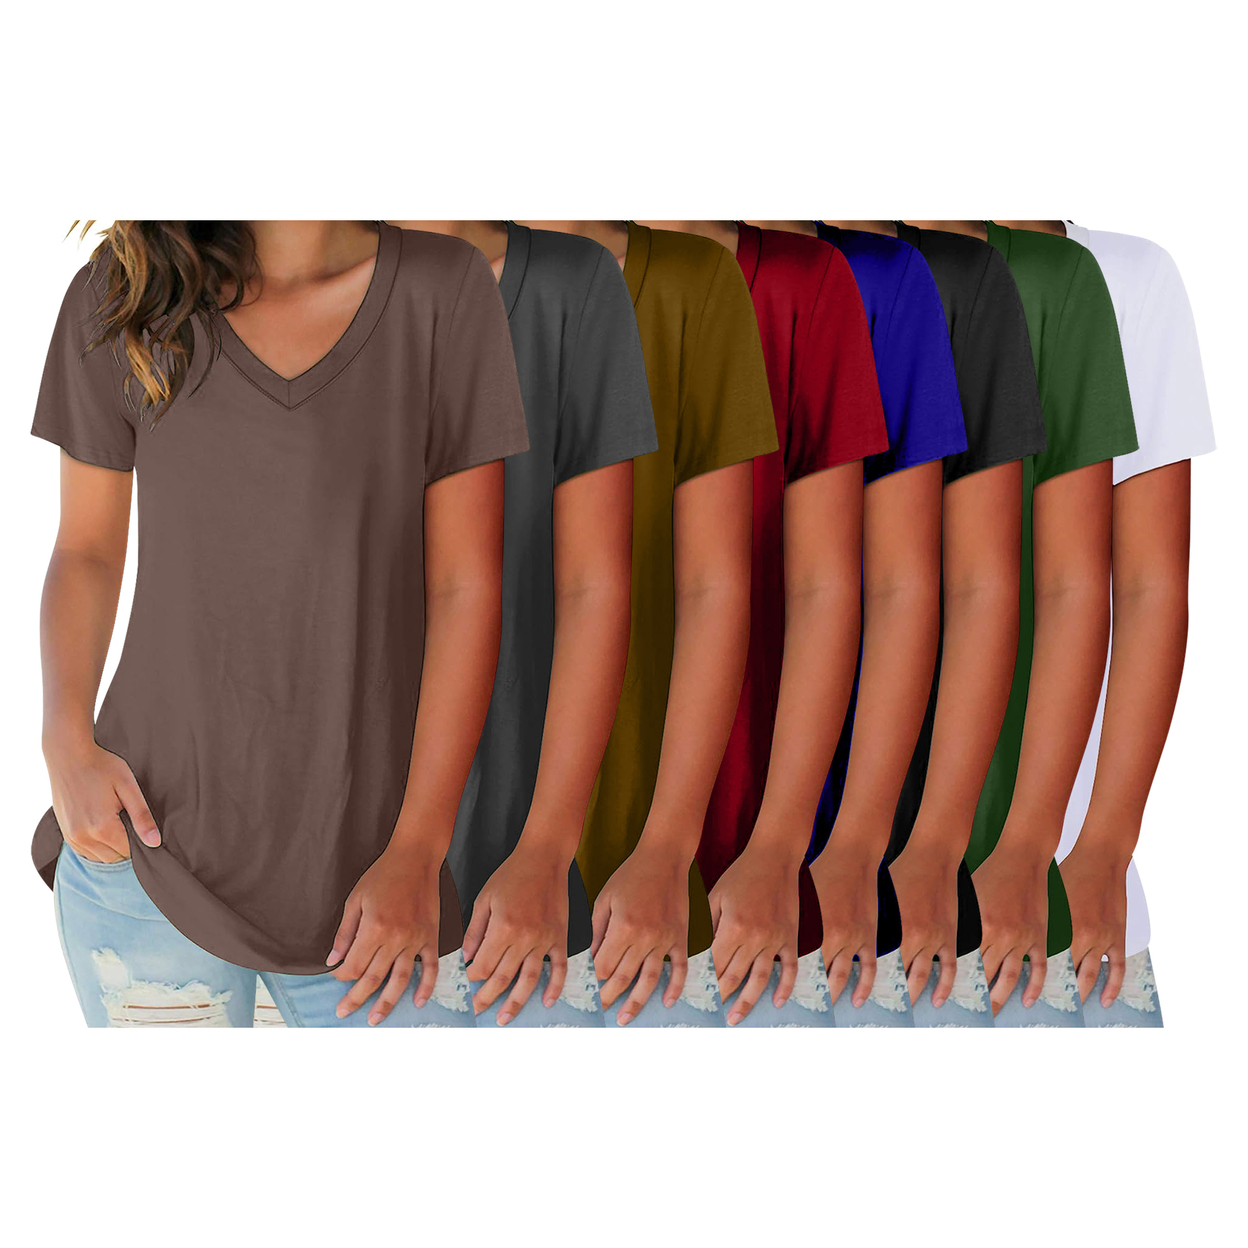 2-Pack: Women's Ultra Soft Smooth Cotton Blend Basic V-Neck Short Sleeve Shirts - Black & Mustard, Large